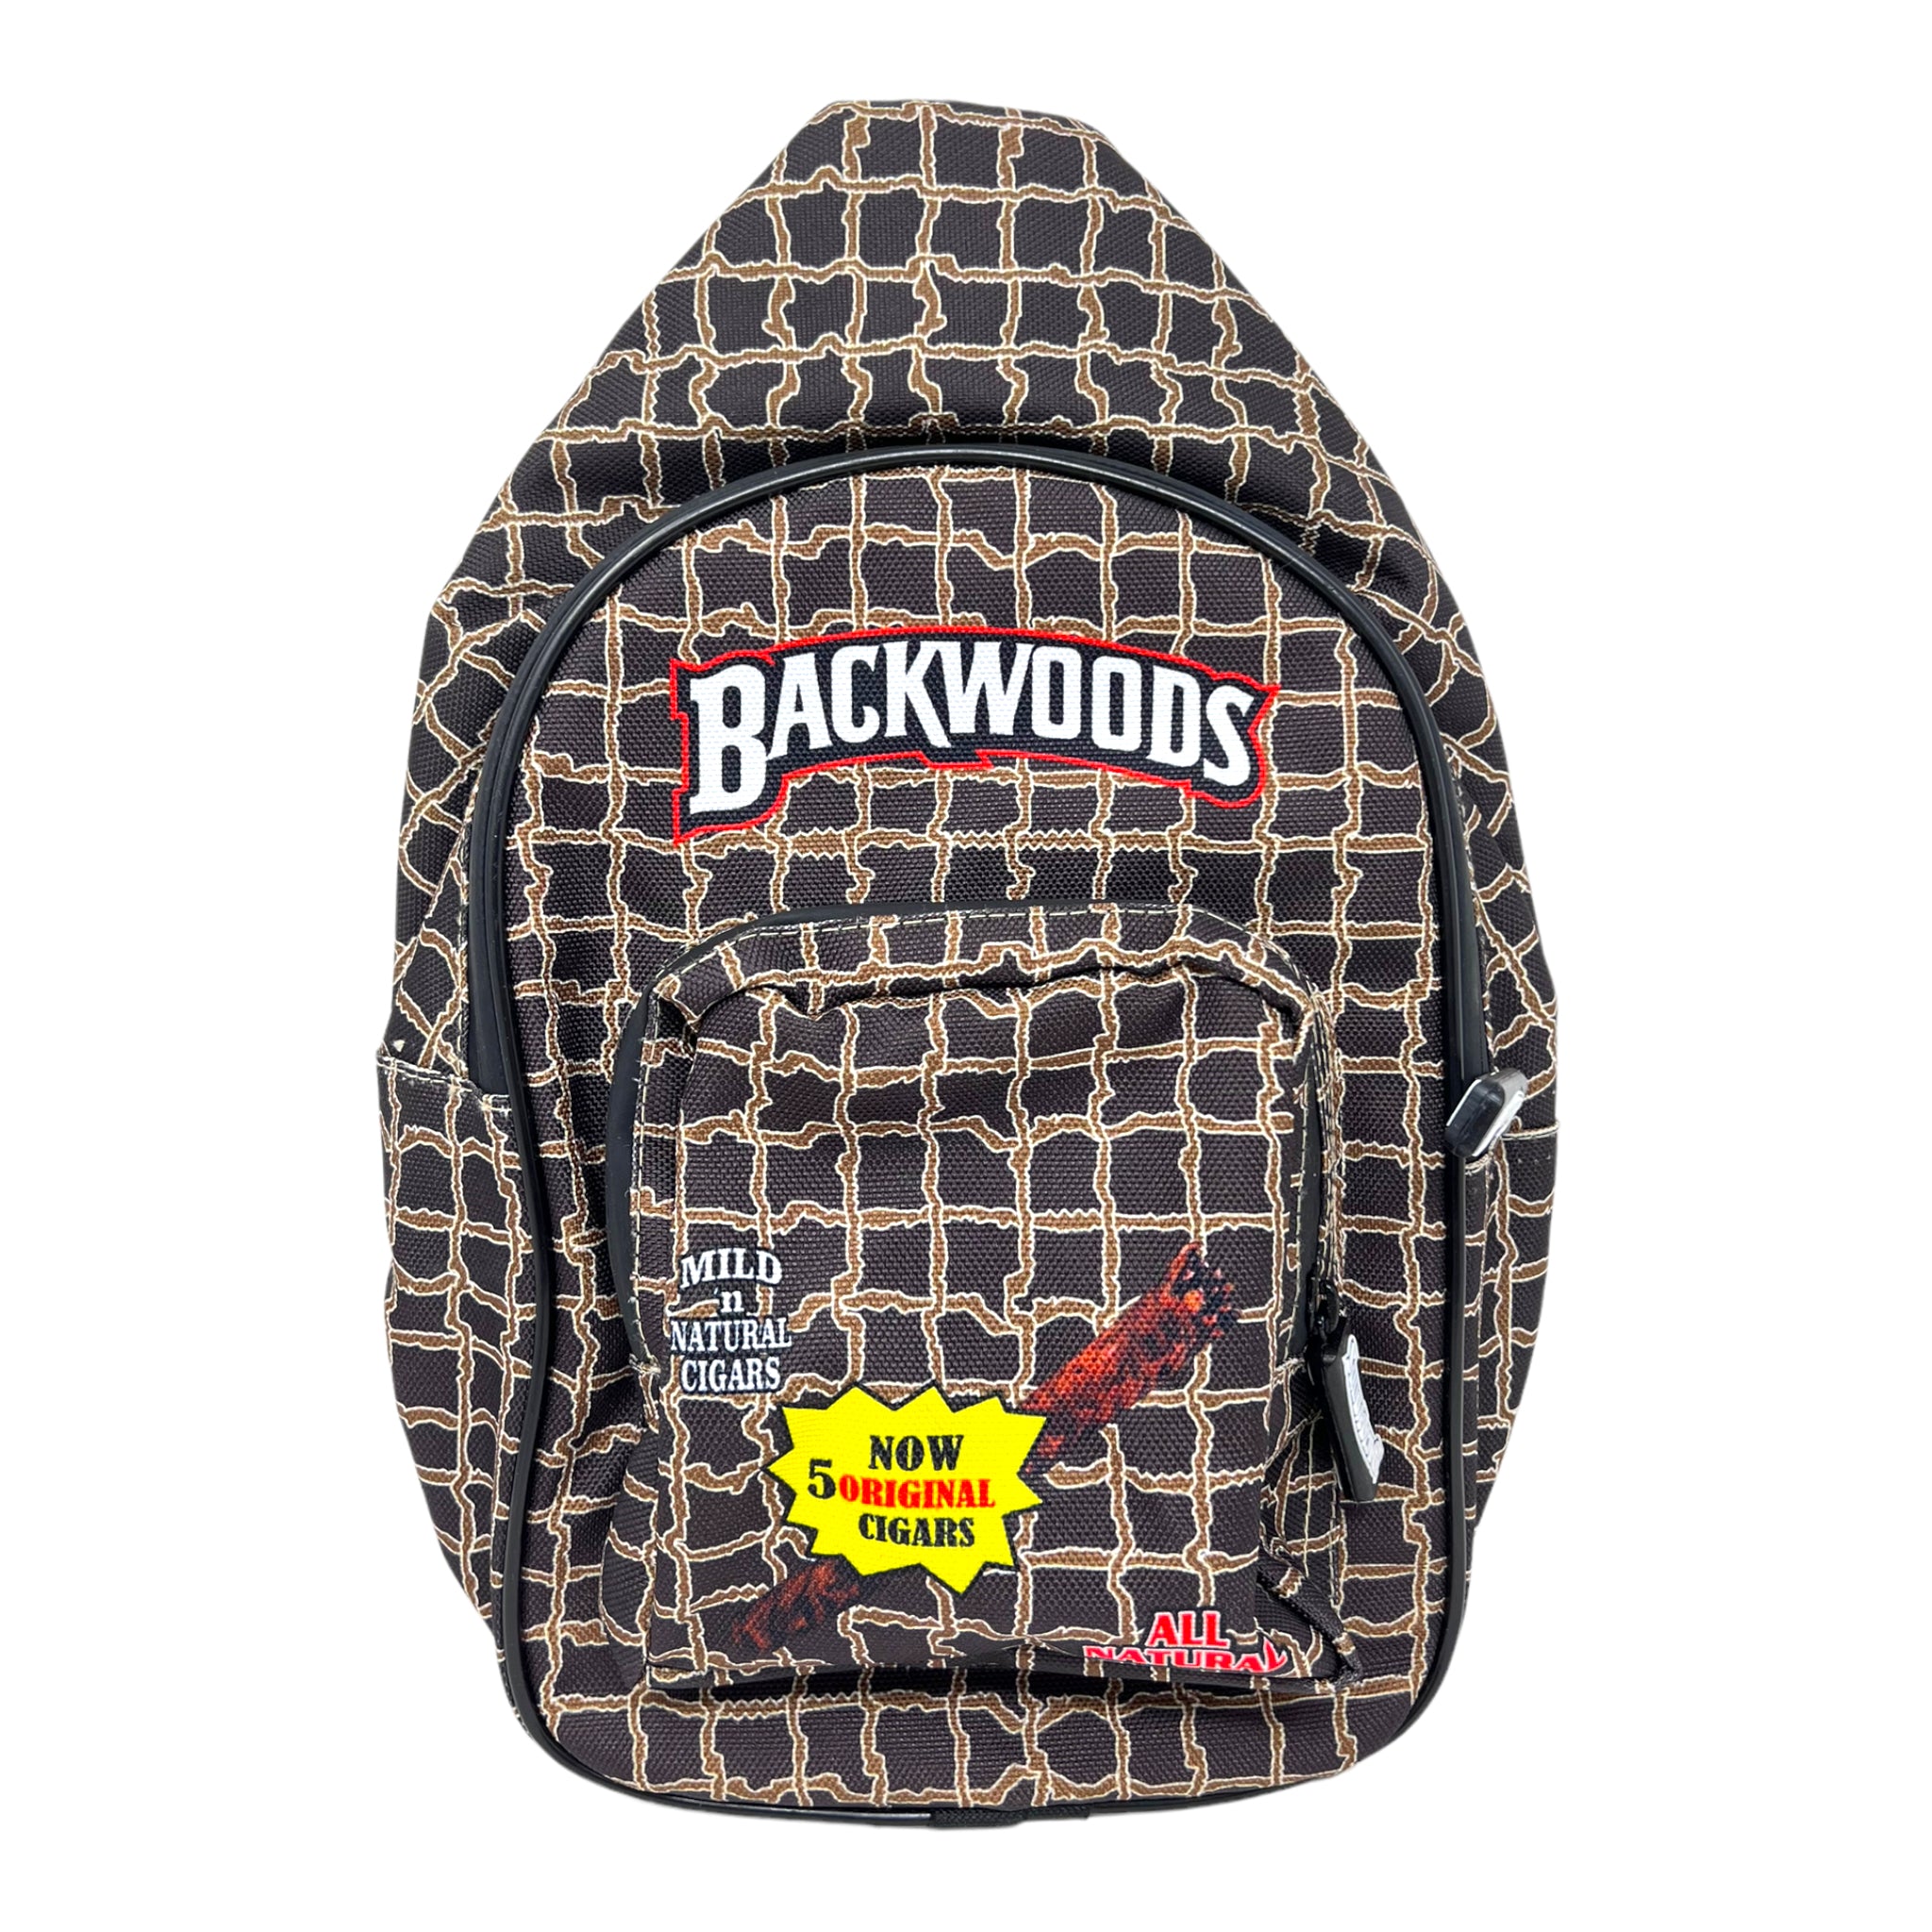 Backwoods Cross Bags